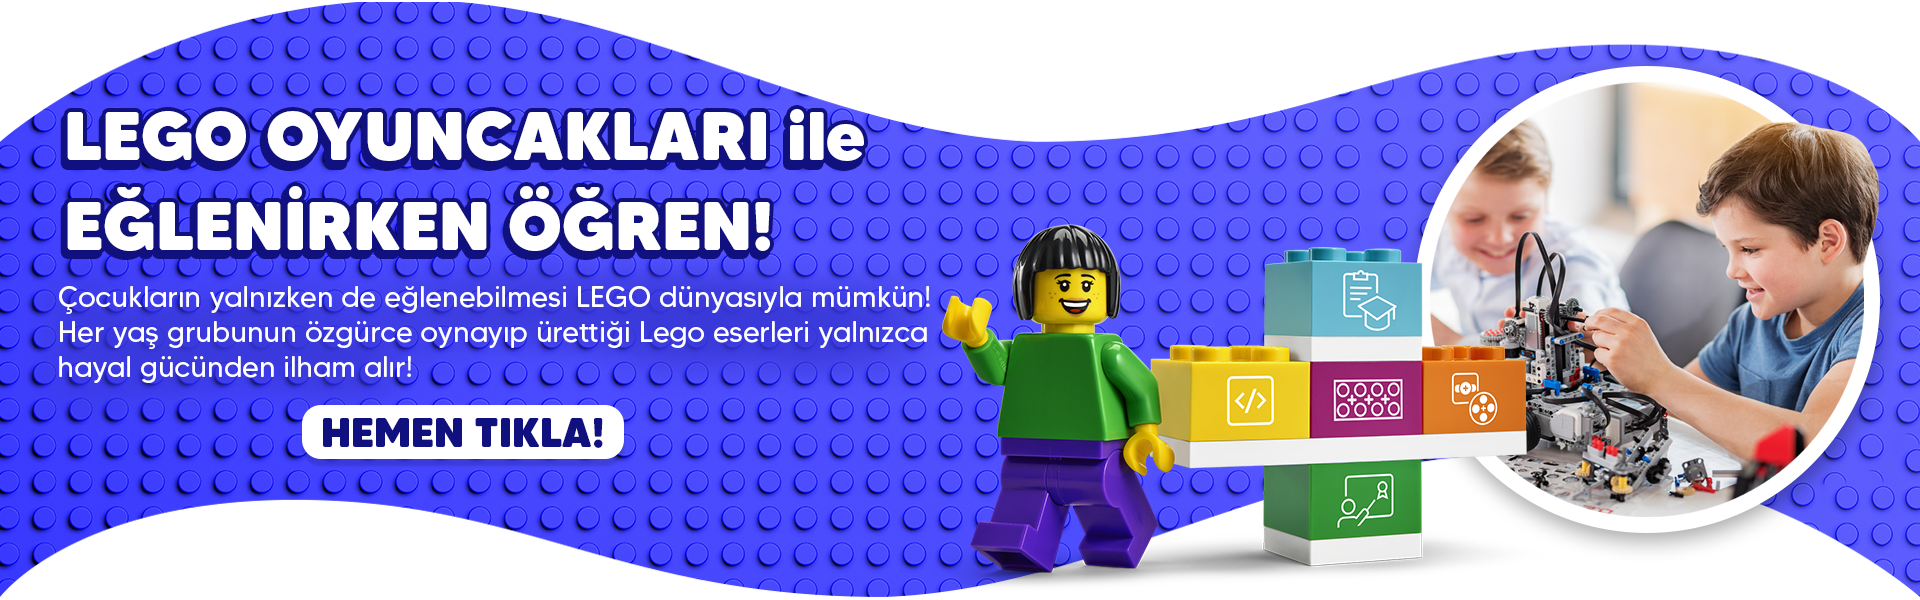 LEGO-OYUNCAKLARI-ile (1).png (1.24 MB)